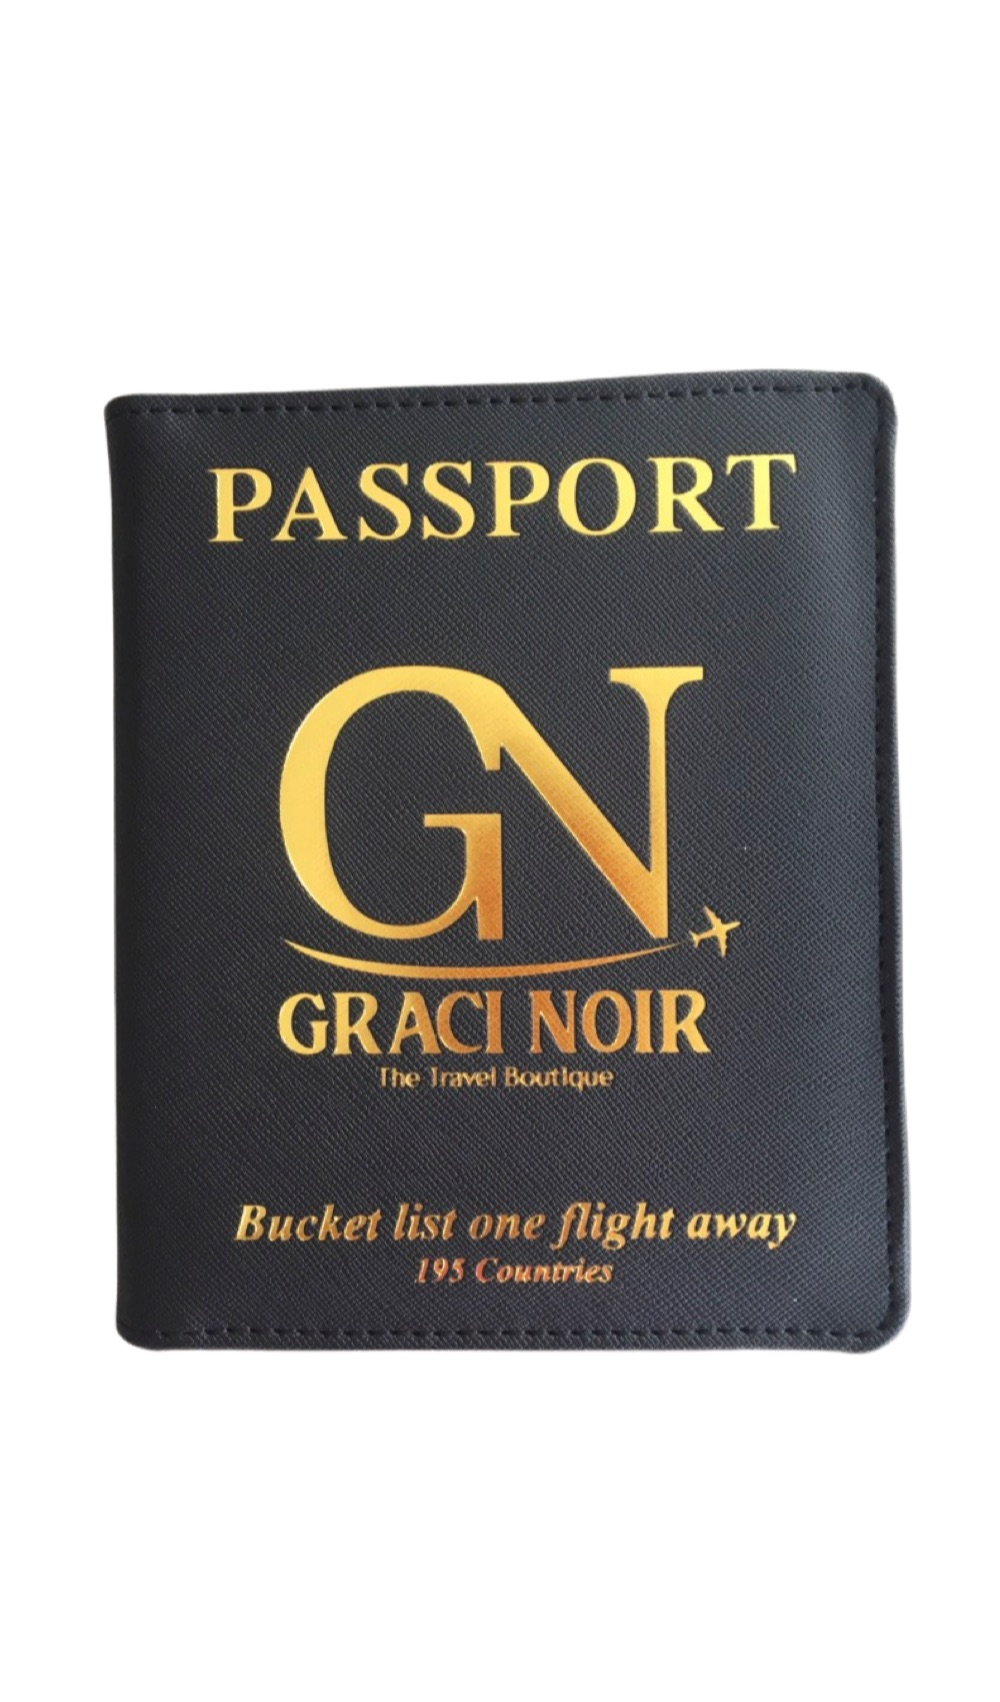 GN PASSPORT WALLET CASE